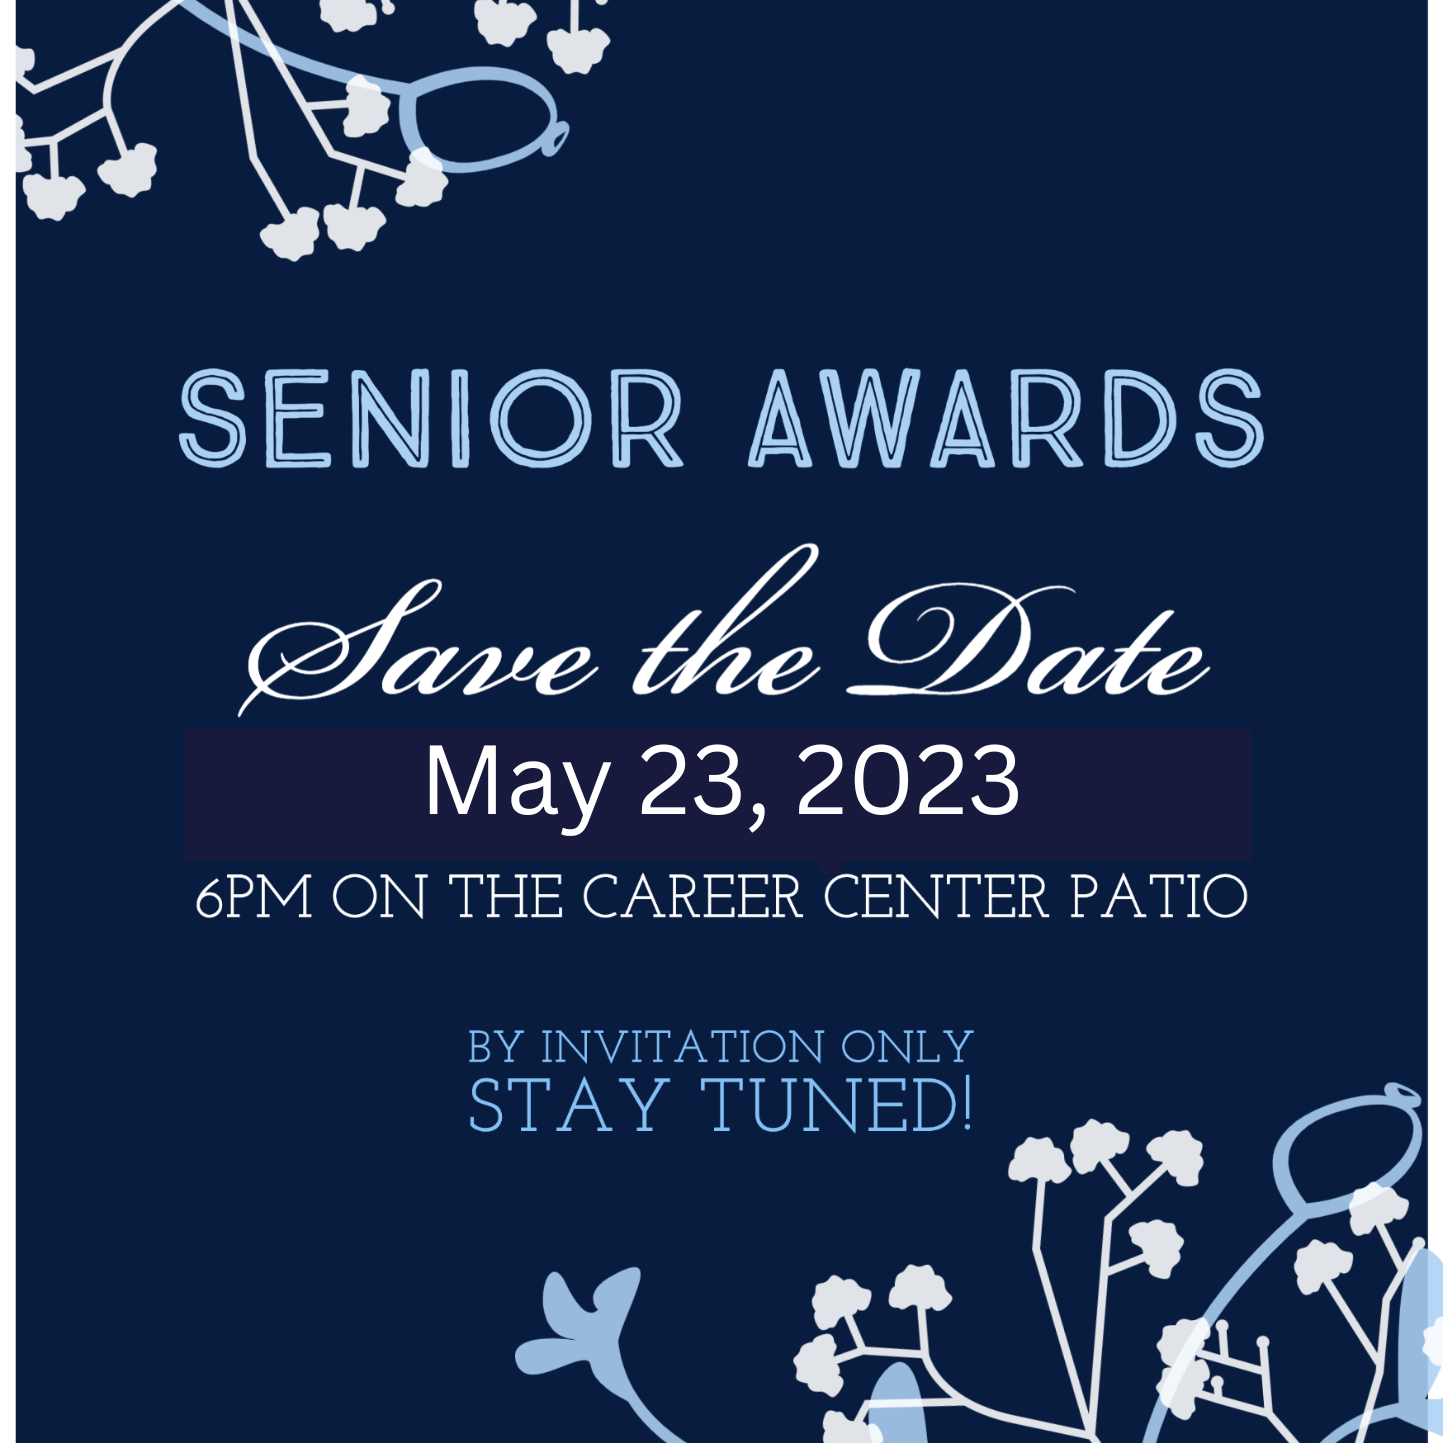 Senior Awards May 25, 2022 Invitation only